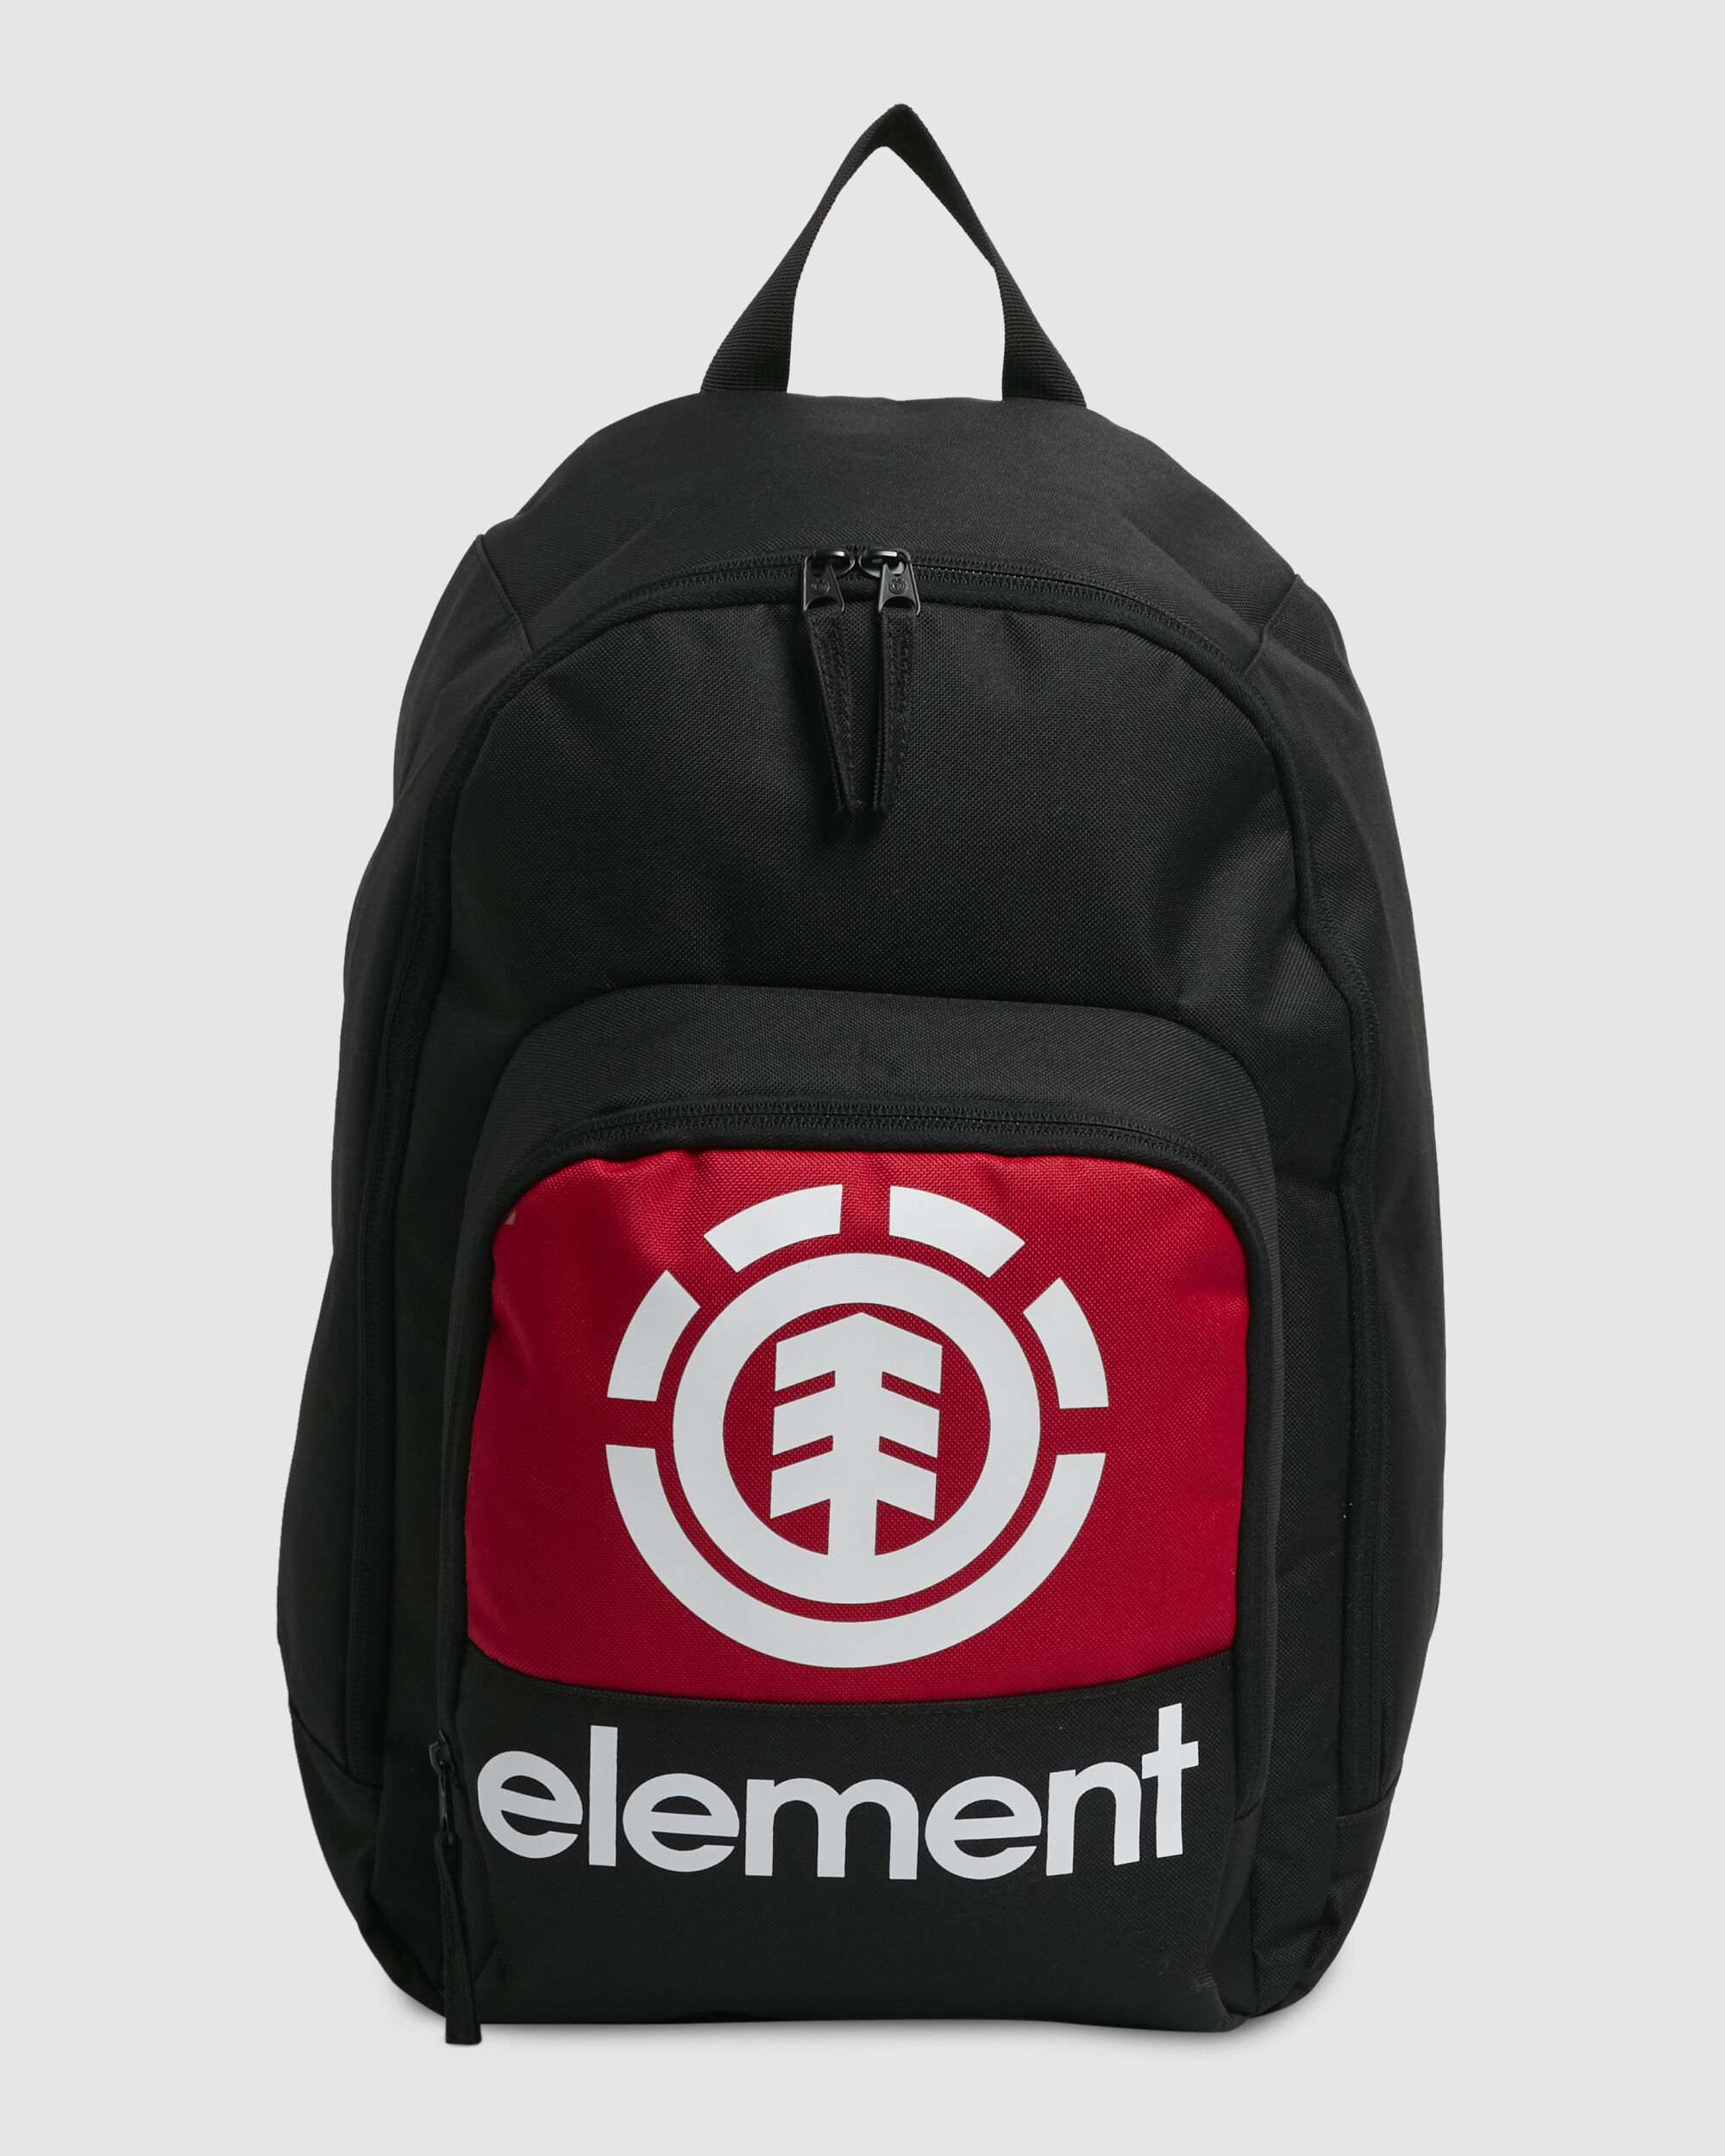 ALPAKA Element Backpack (laptop Bag) Review | by Jessica Bryson | TechLife  | Medium